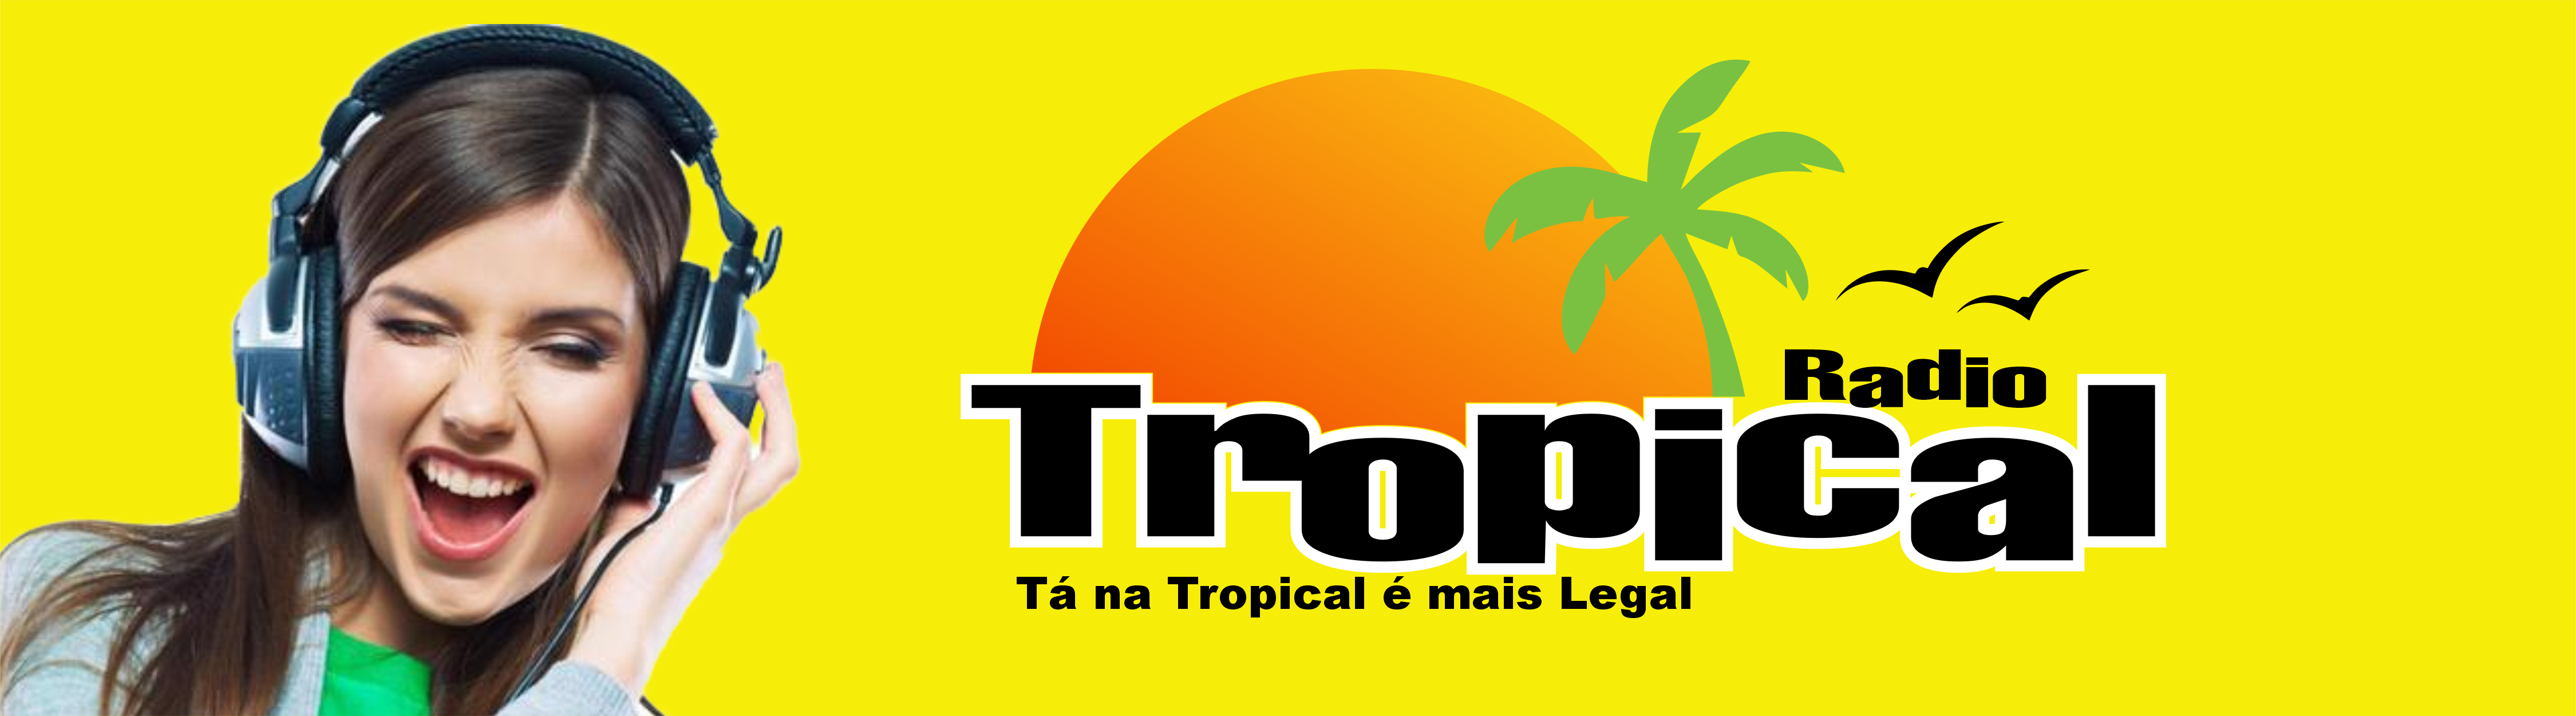 https://tropicalfm95-7.site.radio.br/